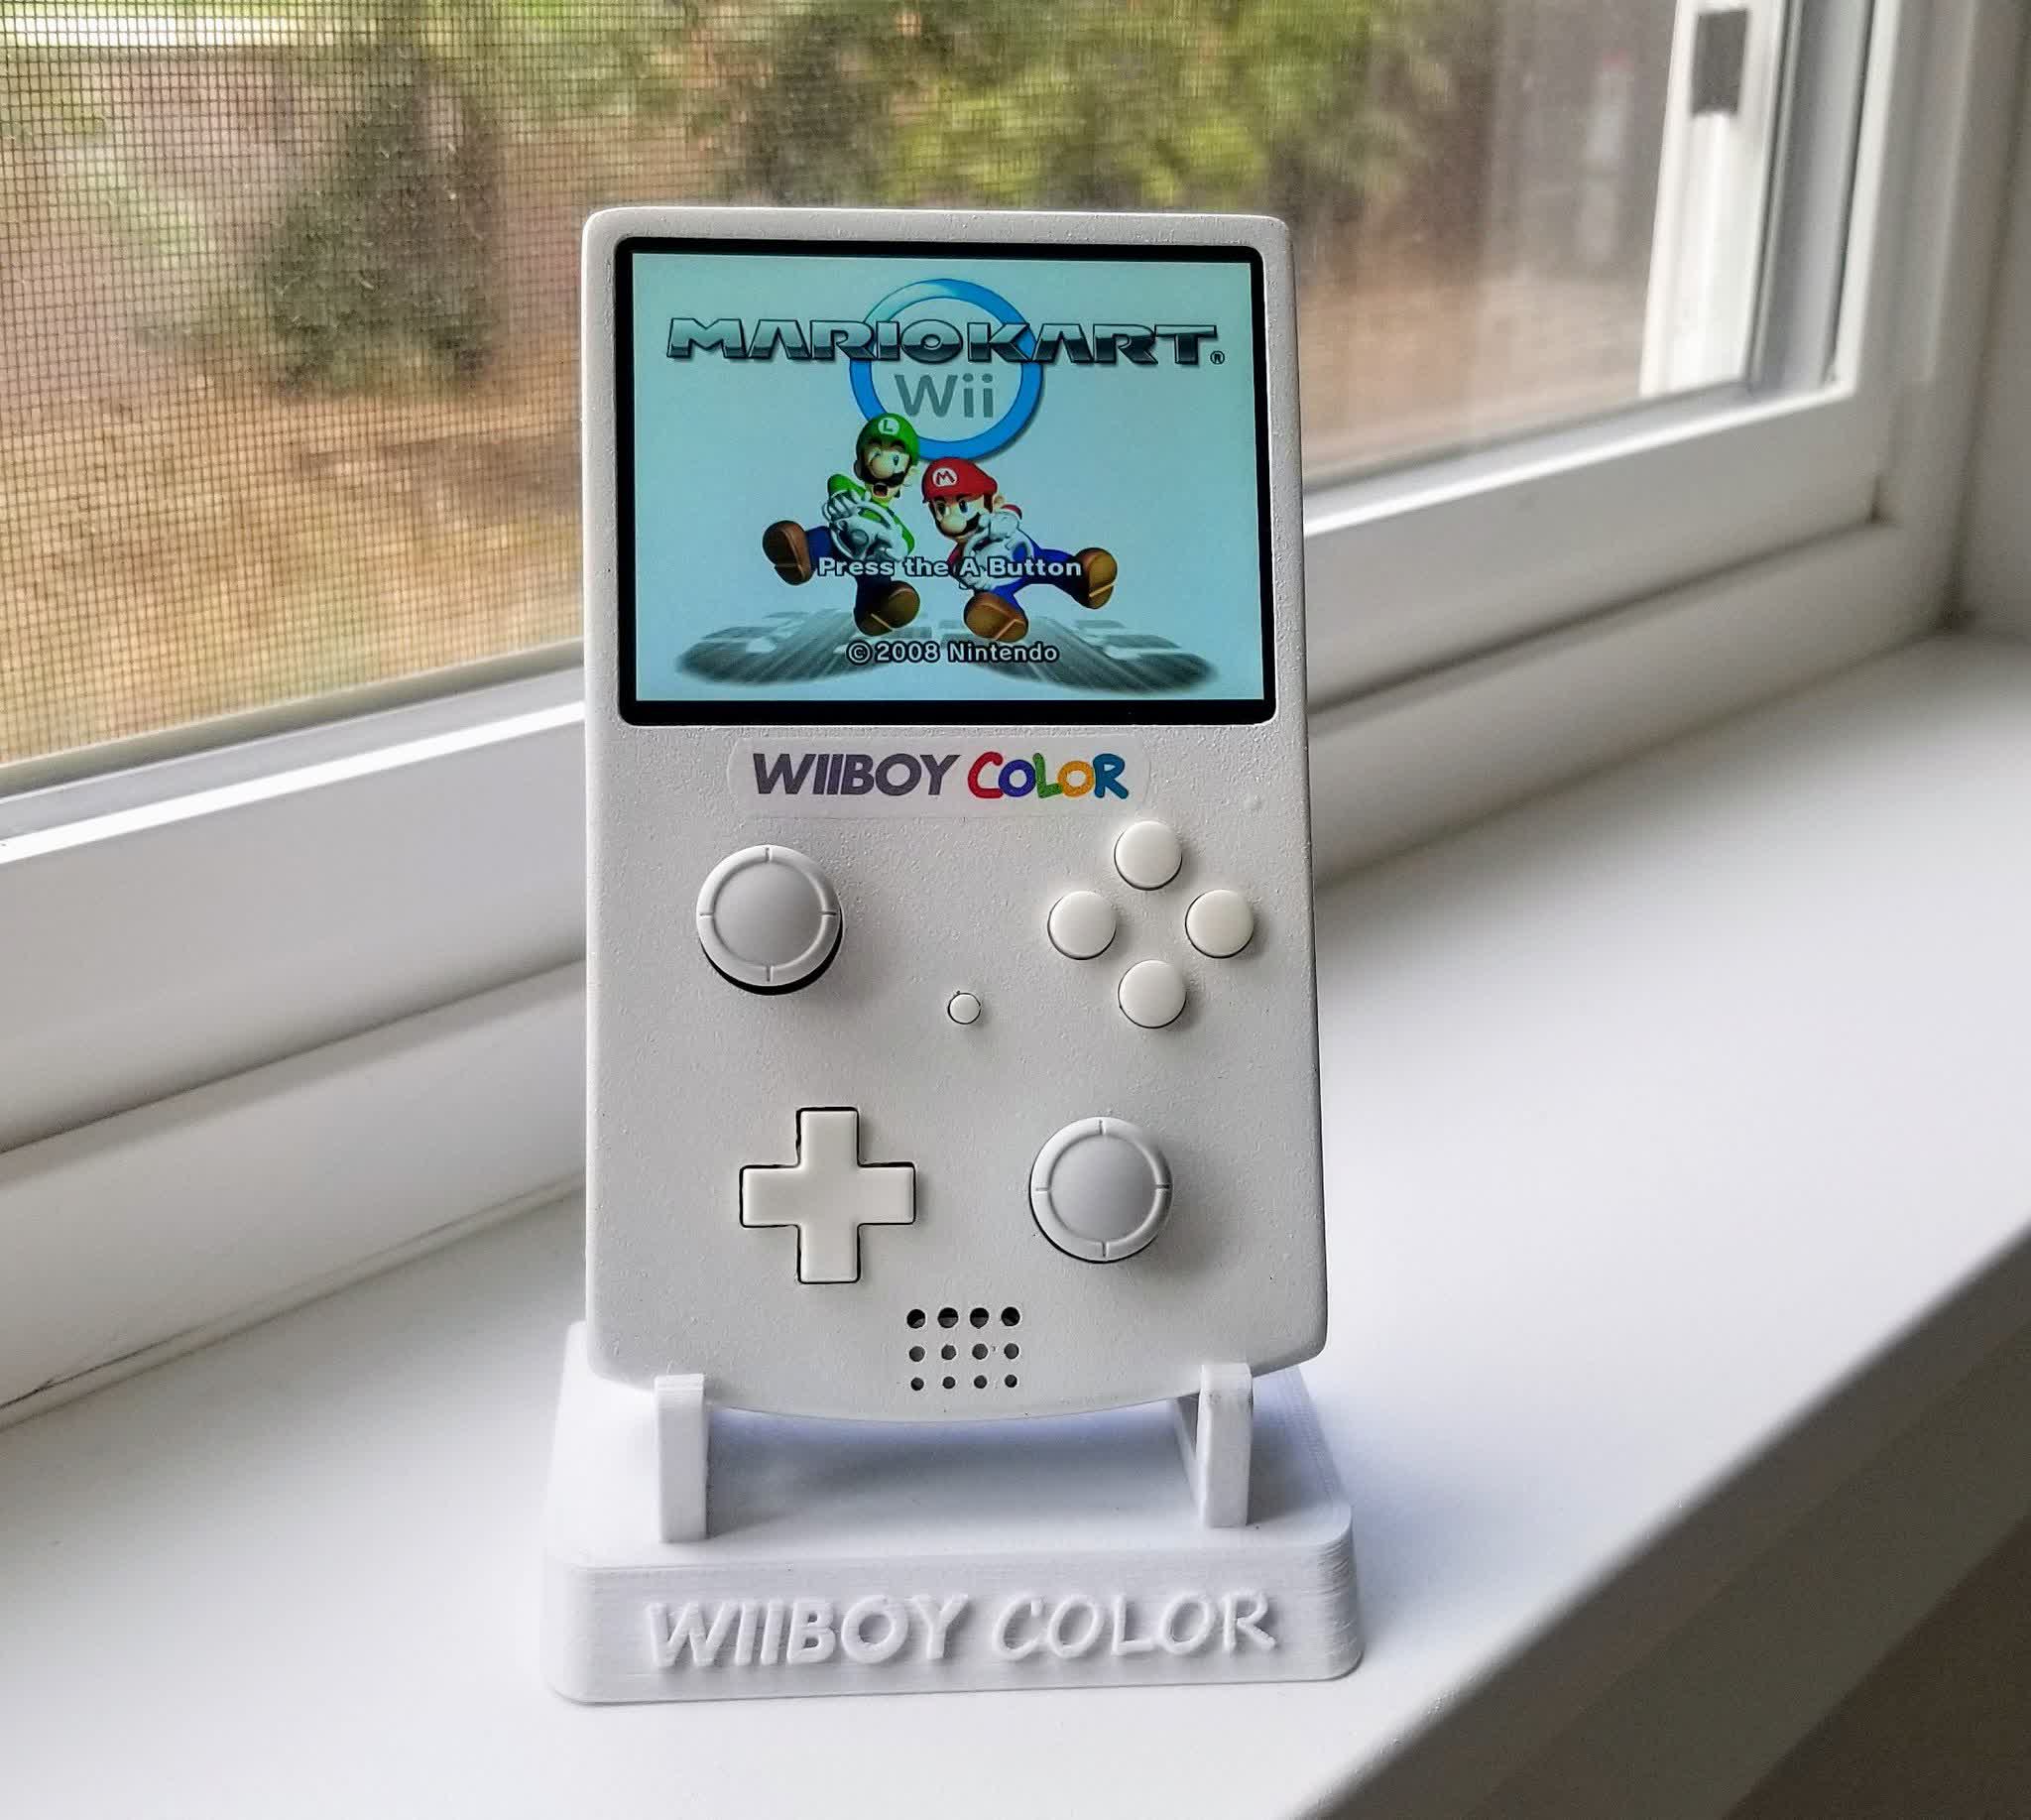 Modder crams Nintendo Wii into a handheld Game Boy Color